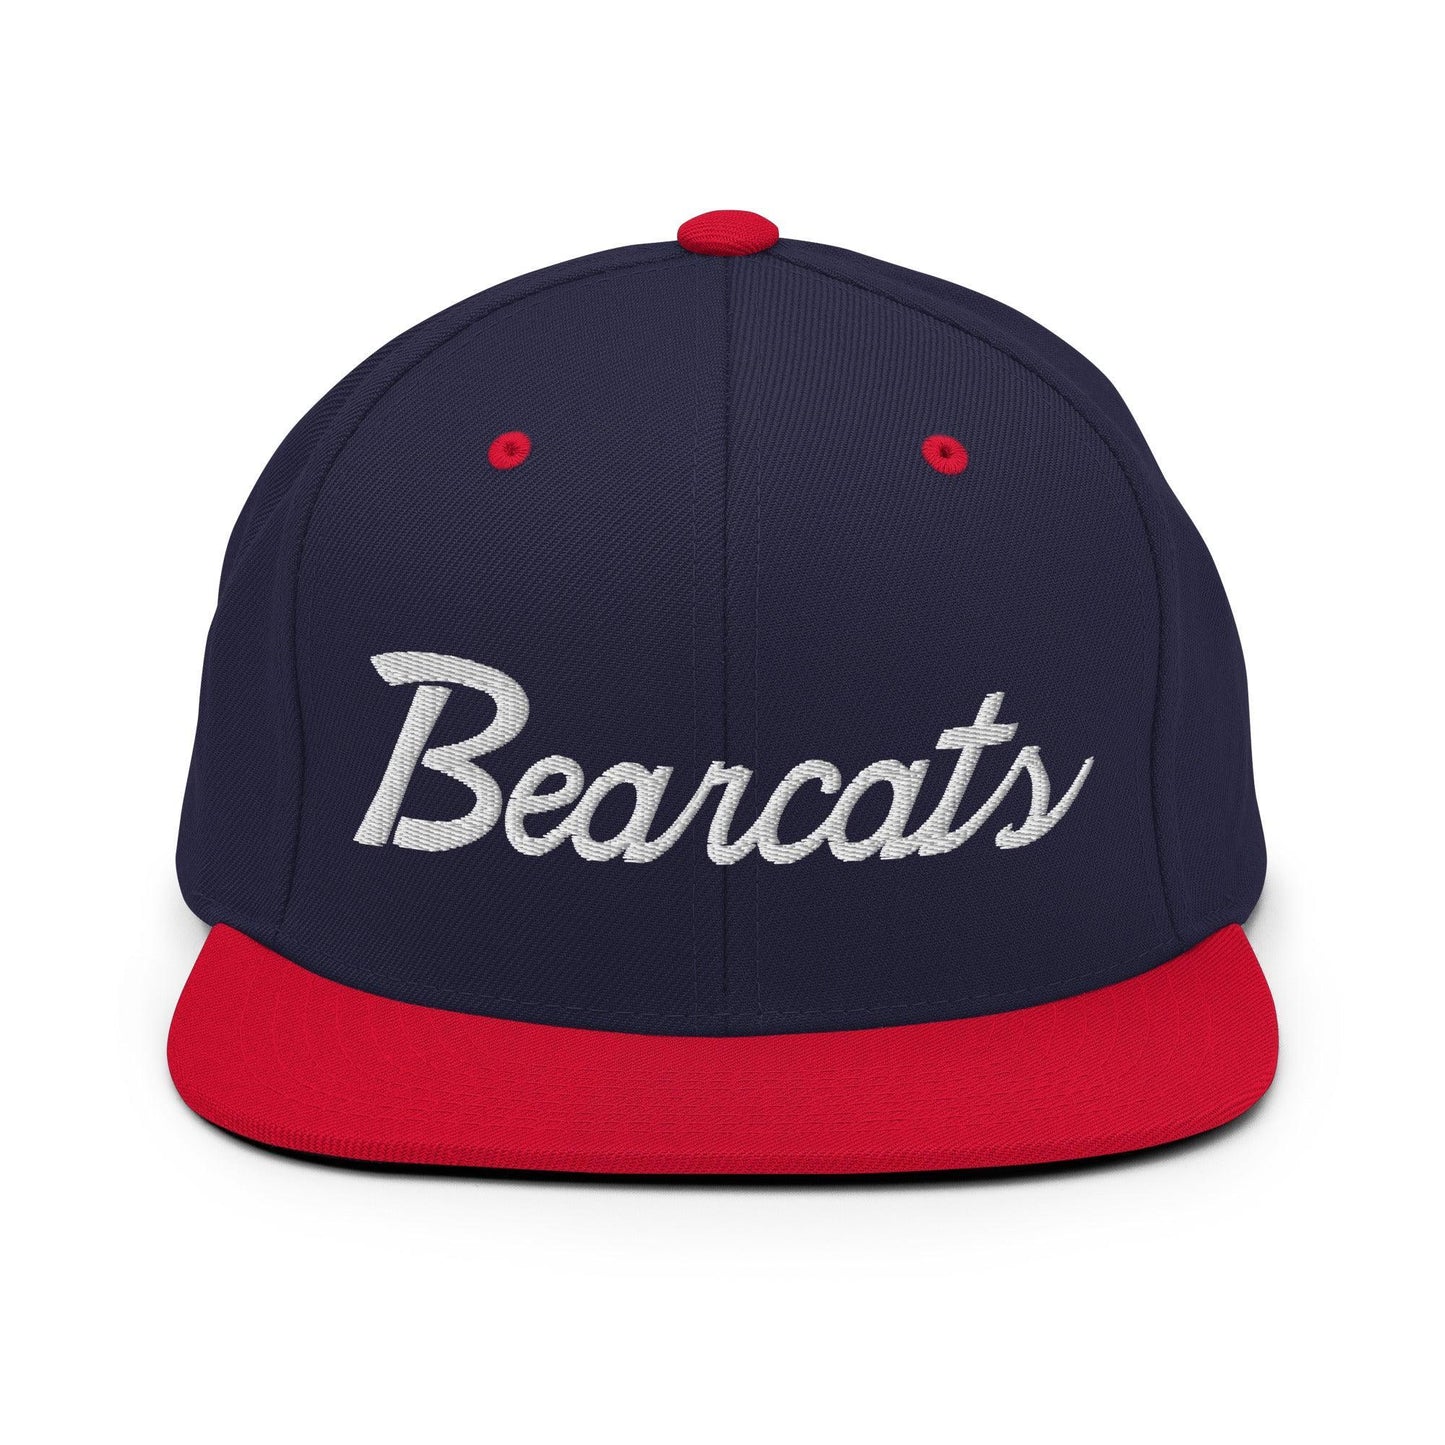 Bearcats School Mascot Script Snapback Hat Navy Red